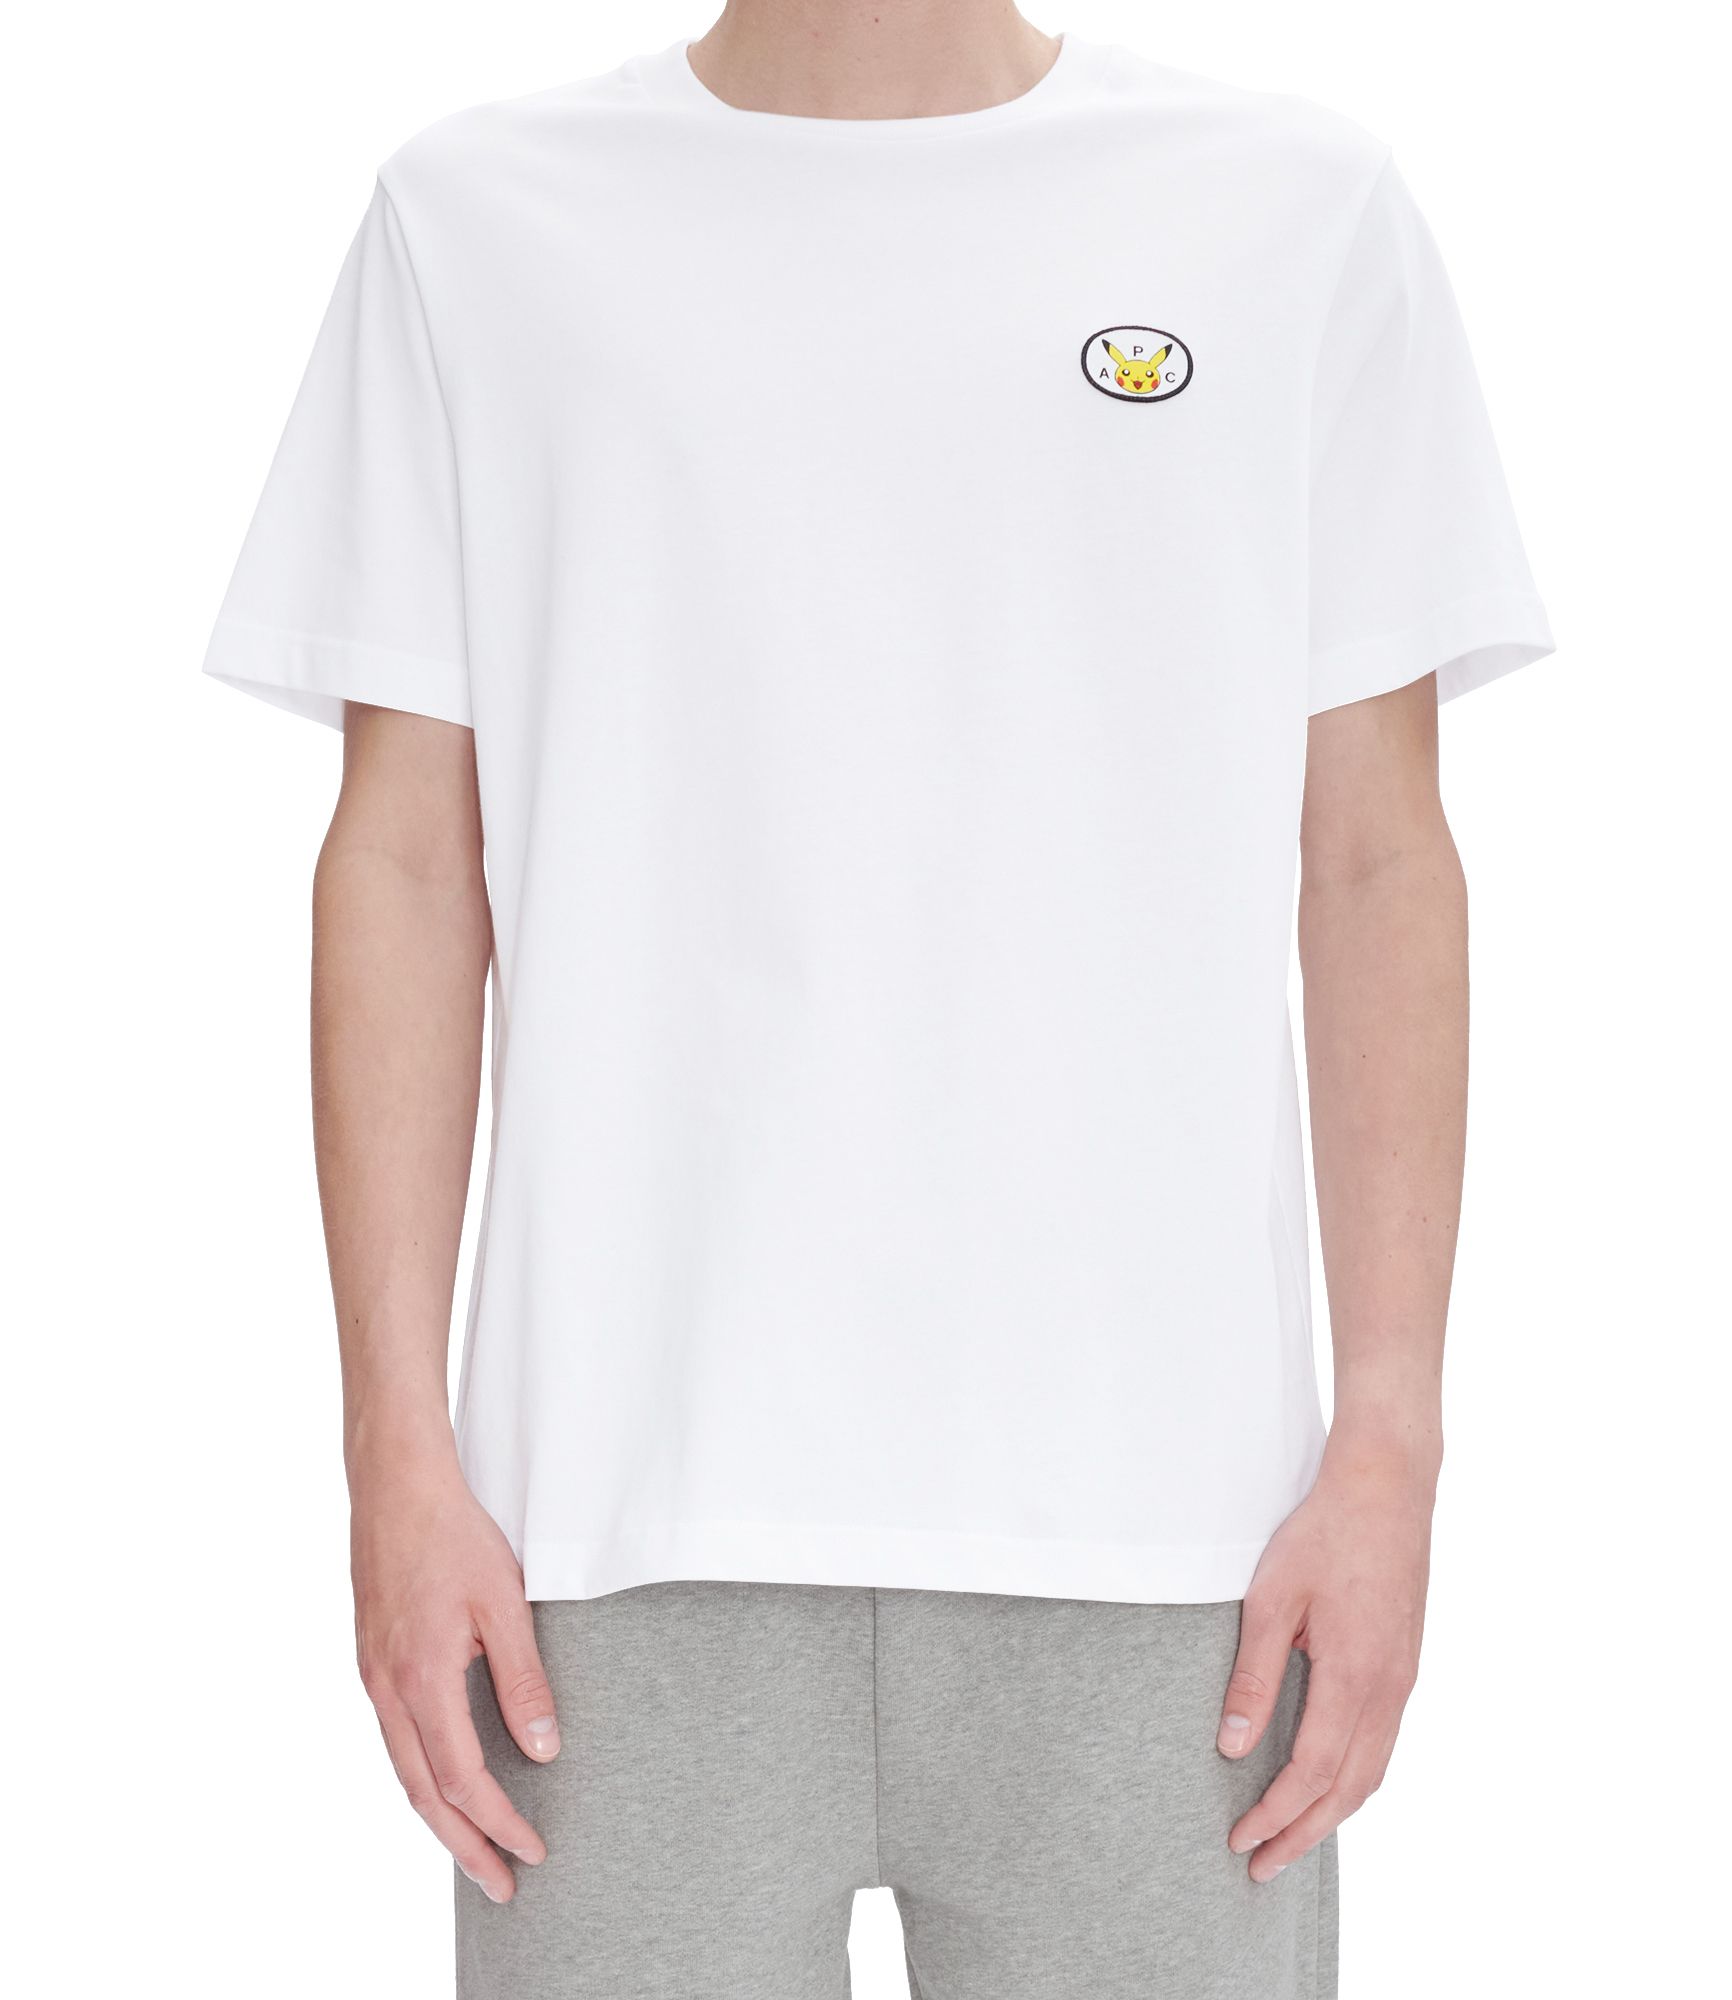 A.P.C 아페쎄 포켓몬 Patch 티셔츠 WHITE울랄라 편집샵